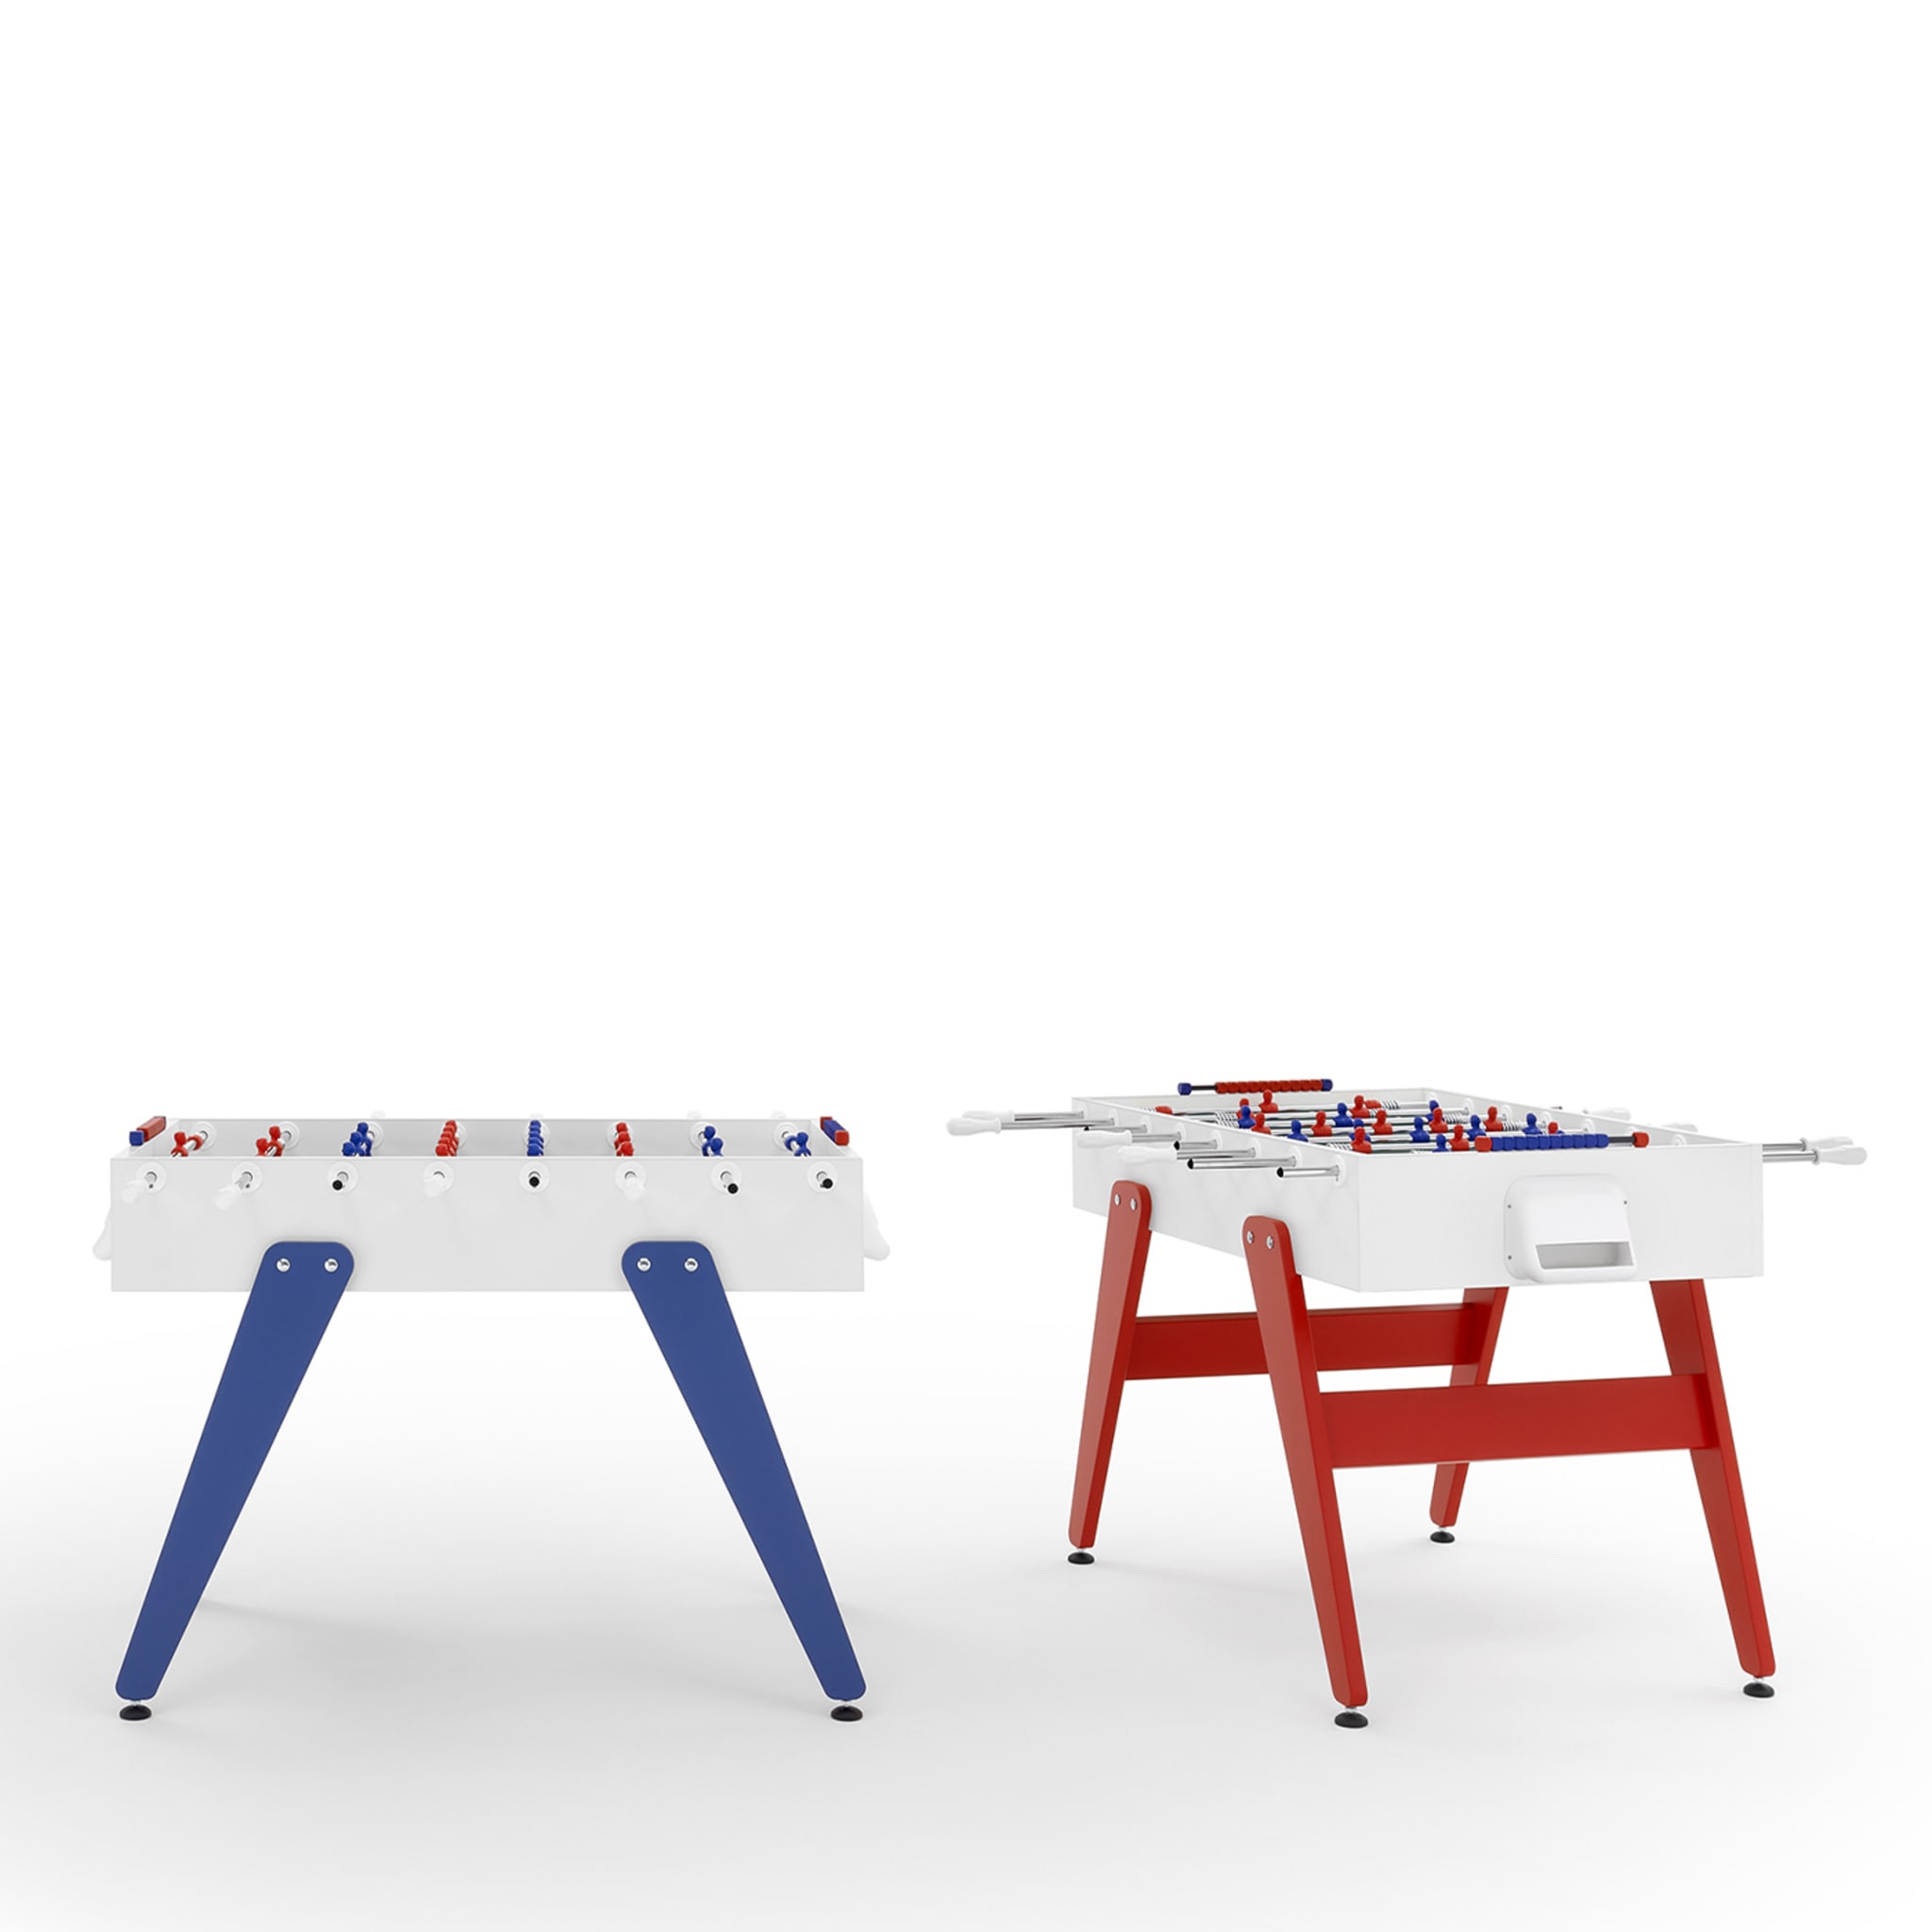 Cross White and Red Foosball Table by Basaglia + Rota Nodari - Alternative view 3